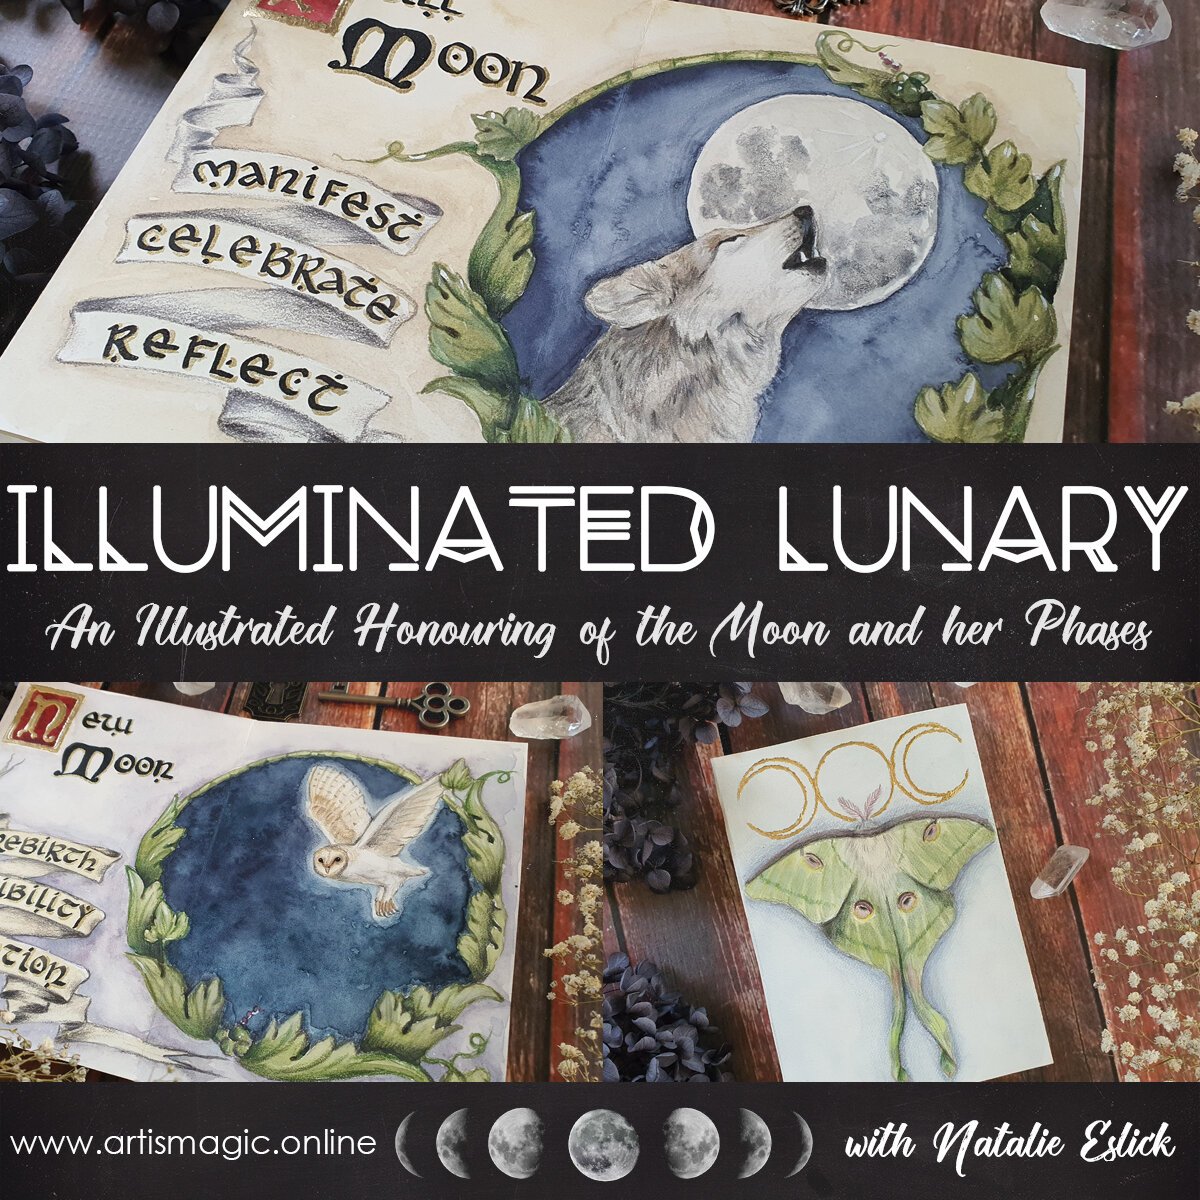 Illuminated+Lunary+with+Natalie+Eslick.jpg